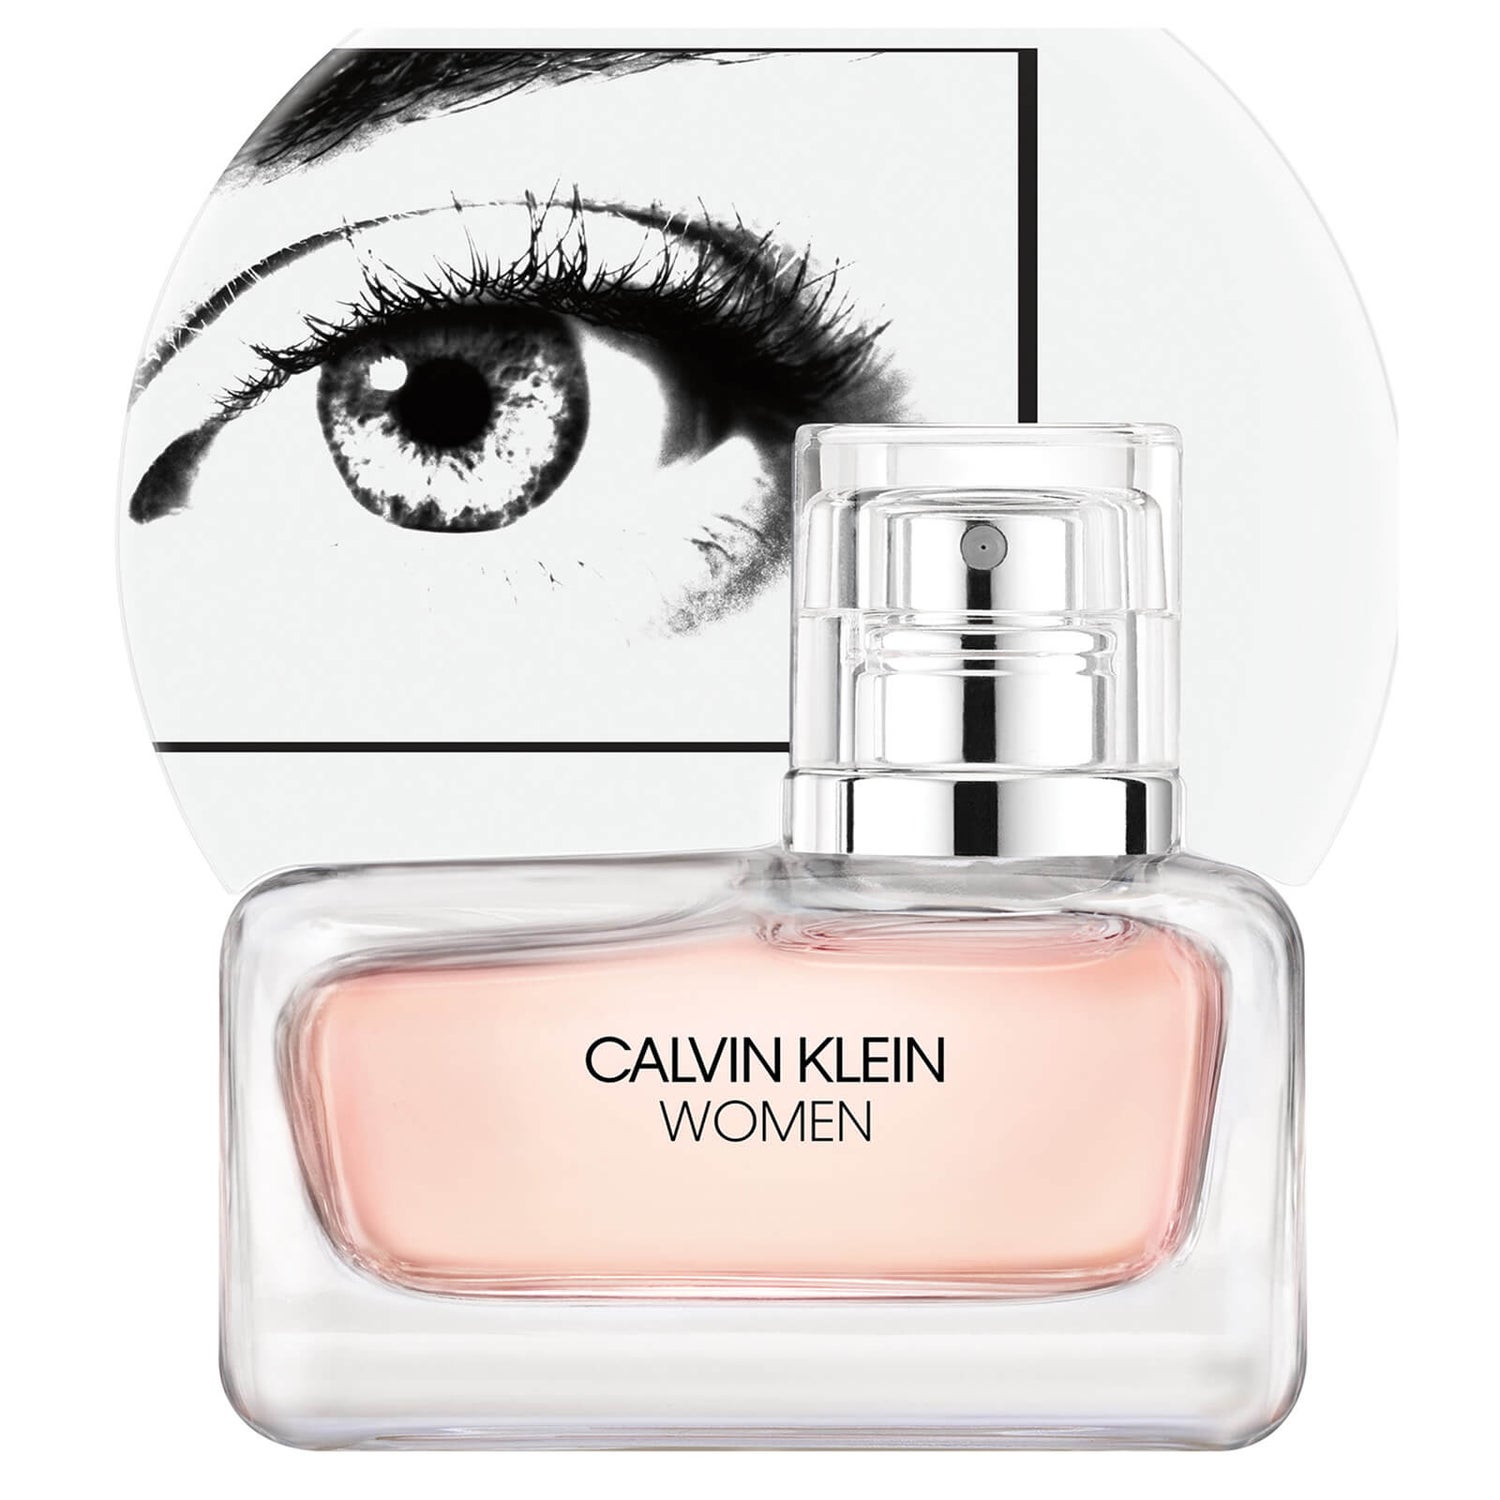 Calvin Klein Women Eau de Parfum 30ml | TheHut.com